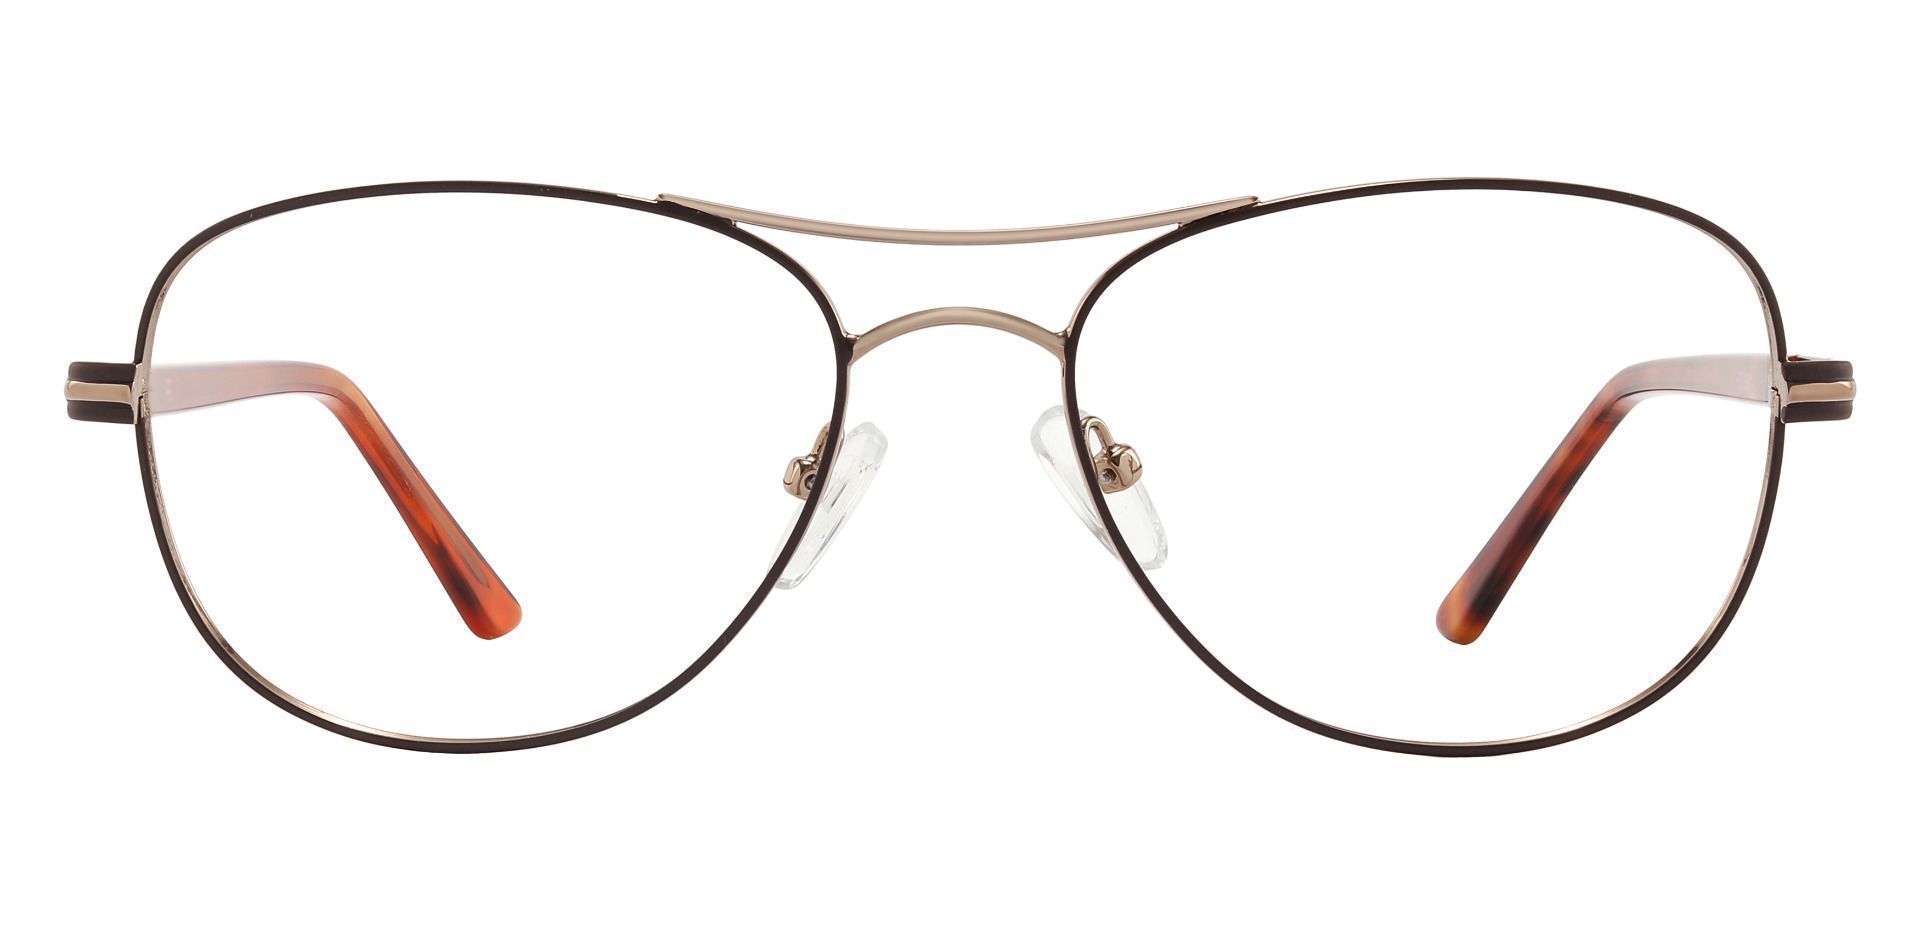 Reeves Aviator Lined Bifocal Glasses - Brown